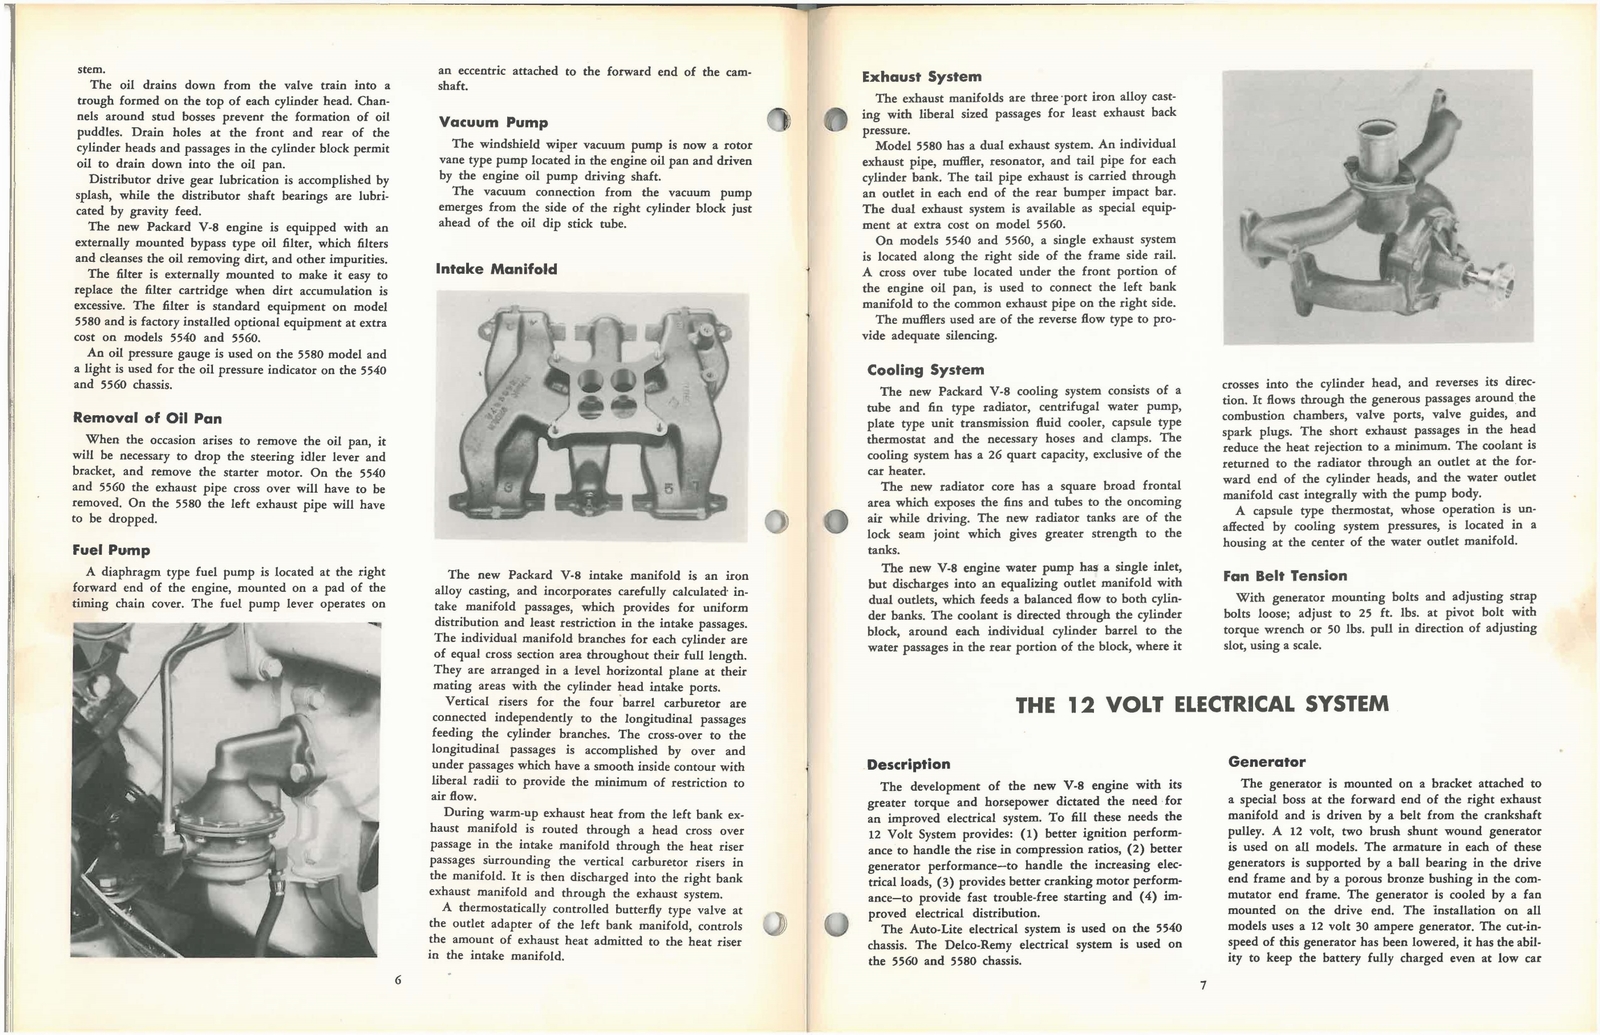 n_1955 Packard Sevicemens Training Book-06-07.jpg